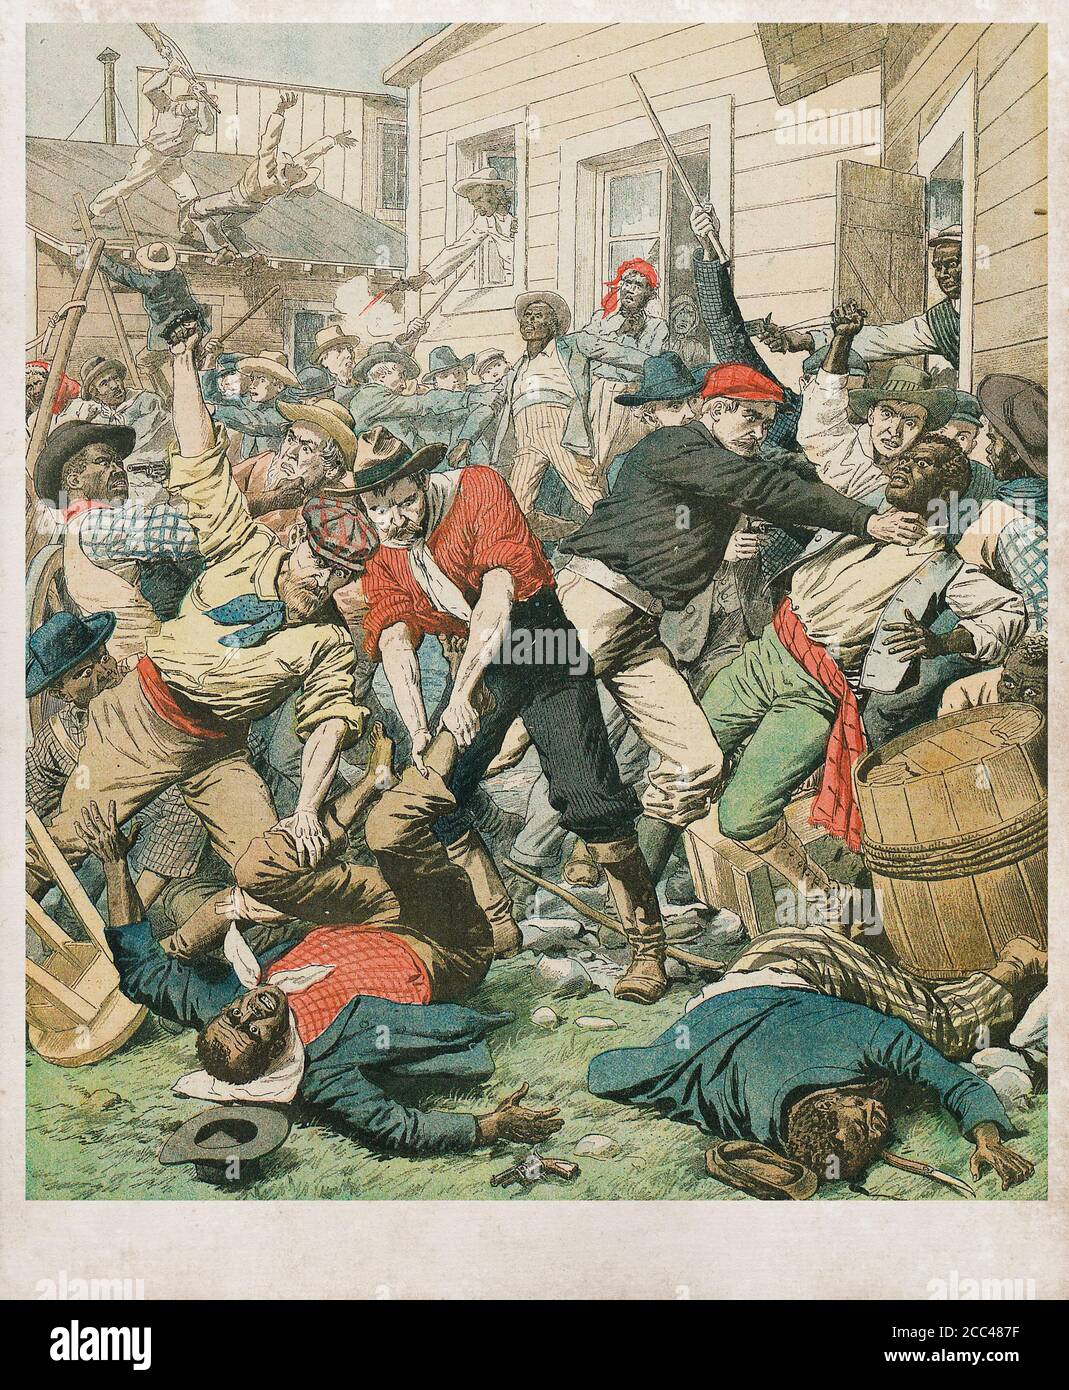 Wilmington, North Carolina race riot, 1898: Black men firing handguns in street (drawing) Stock Photo